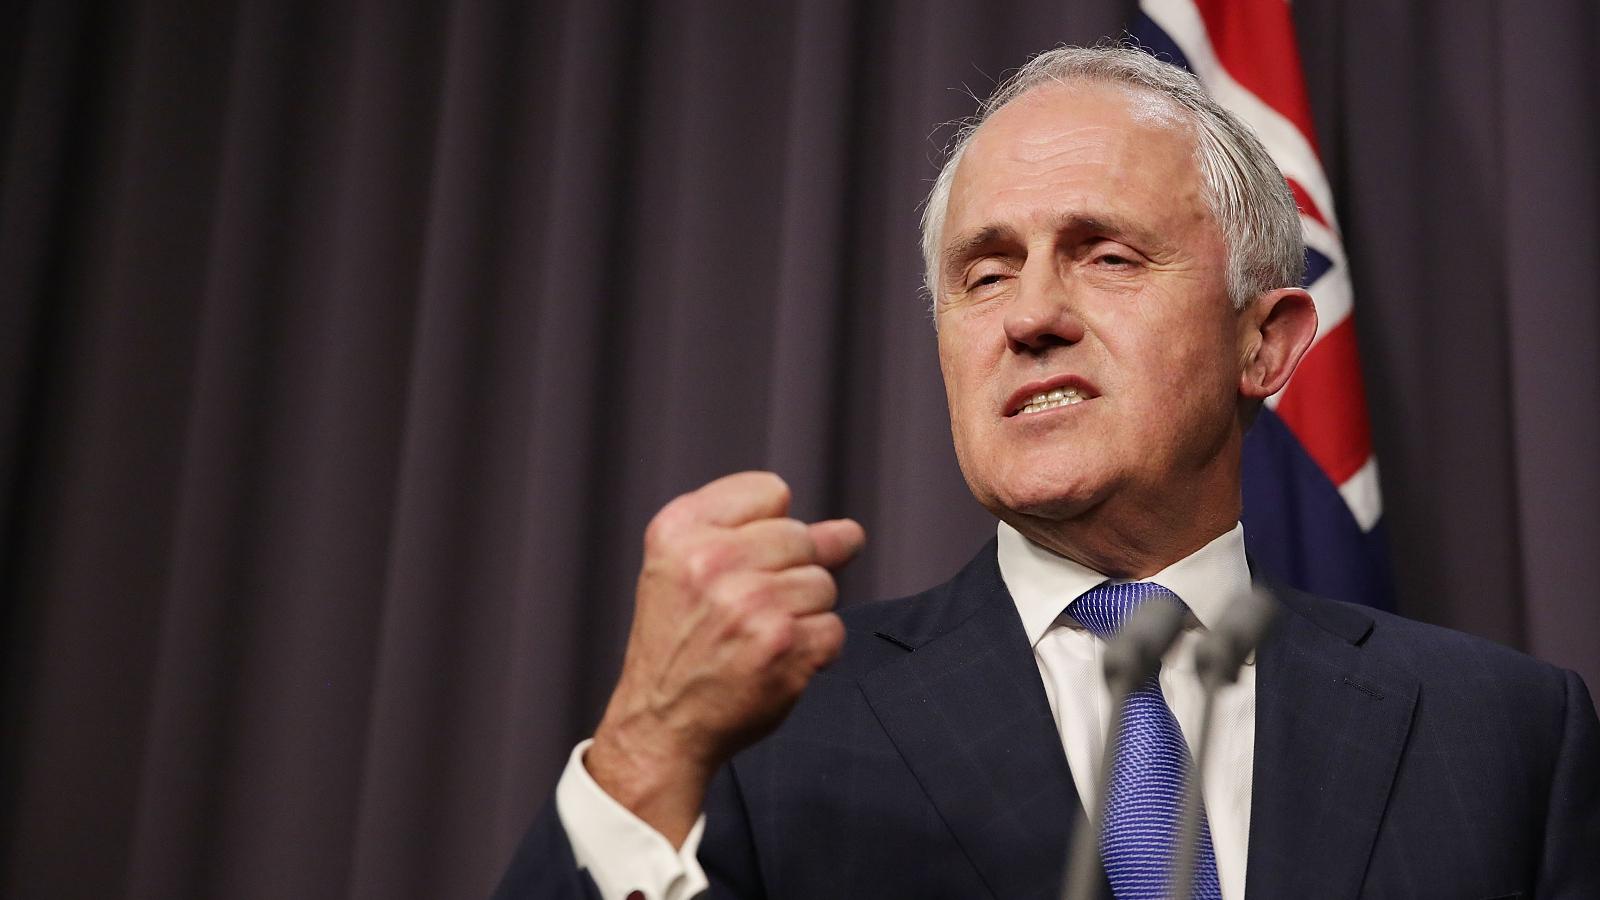 Prime Minister Malcolm Turnbull Refuses To Endorse Same